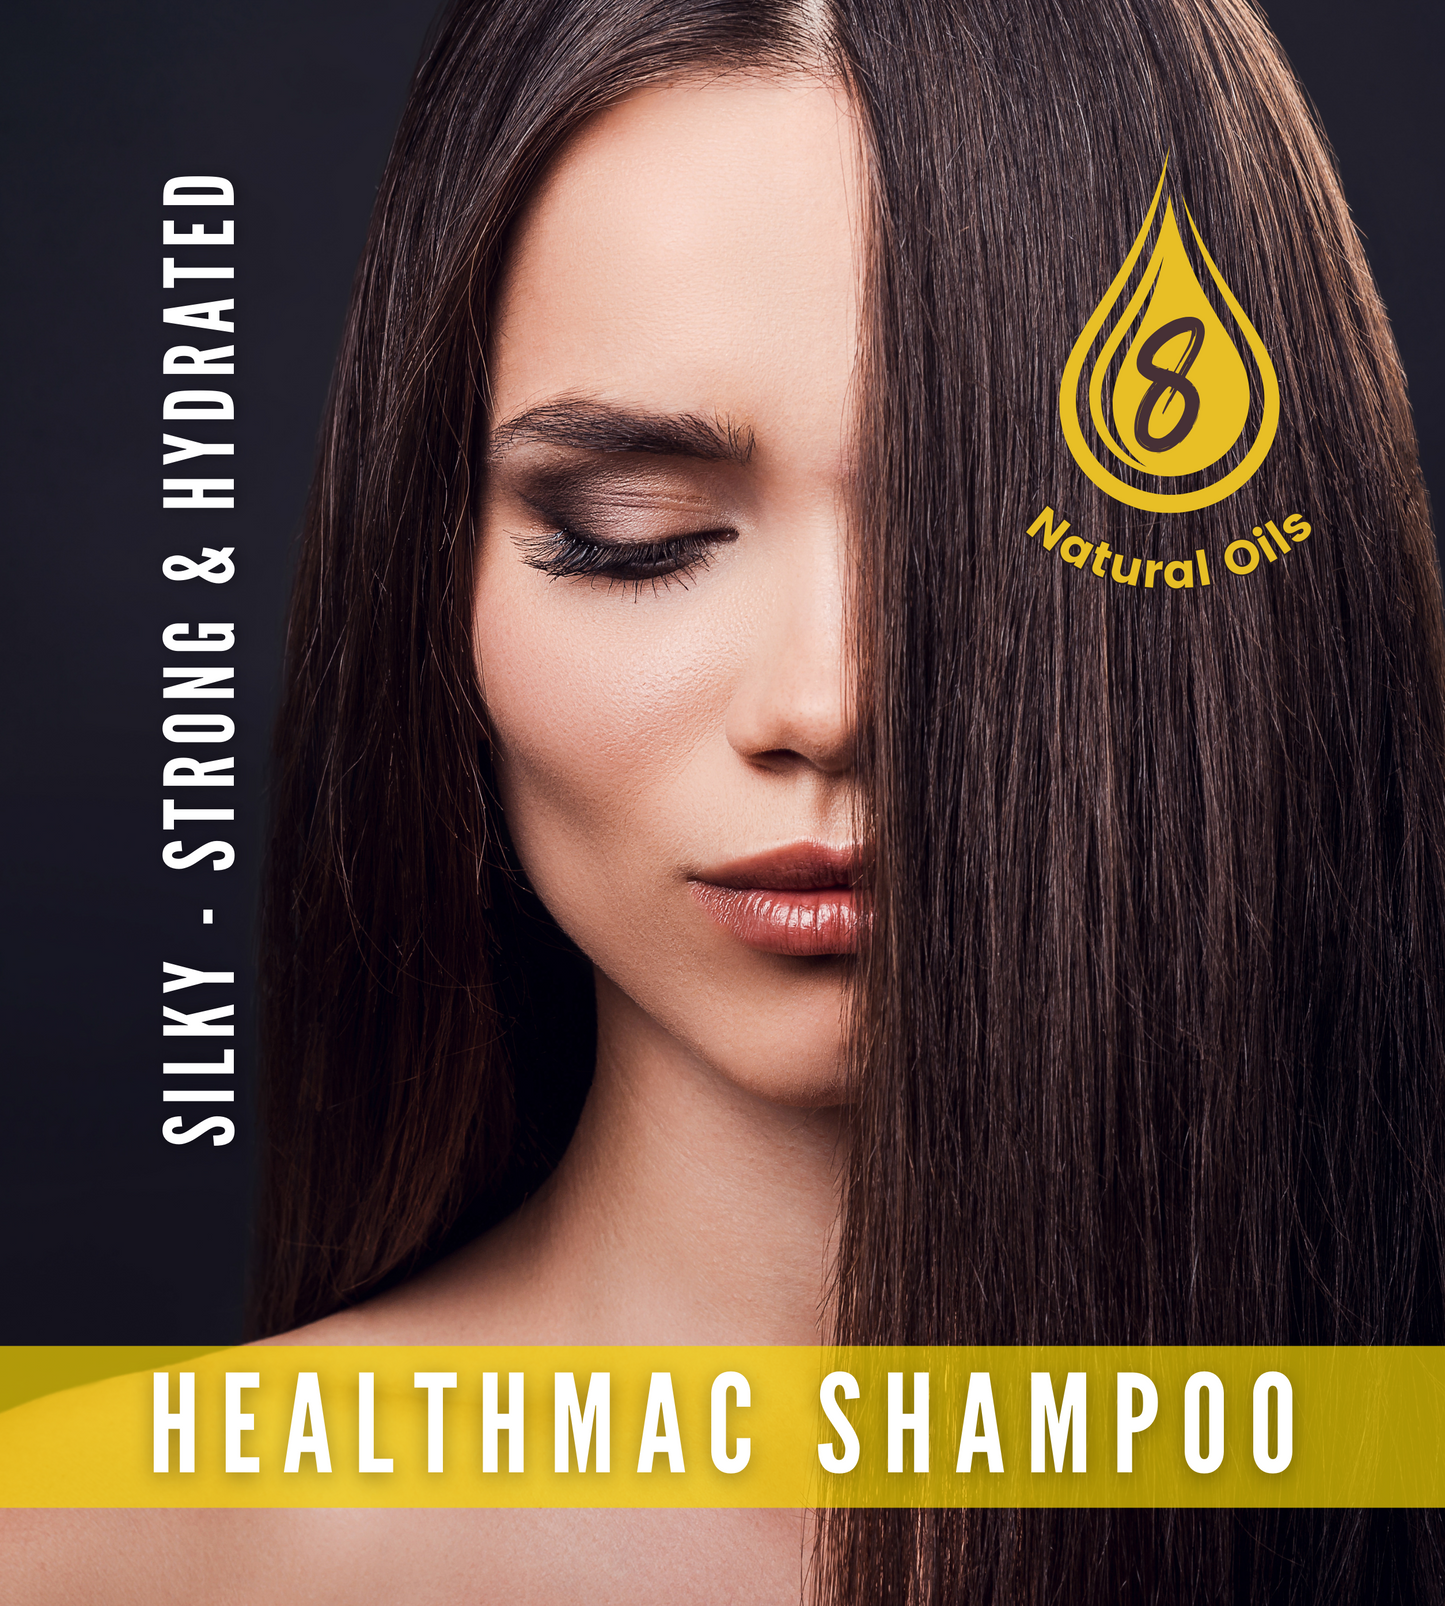 Healthmac Shampoo